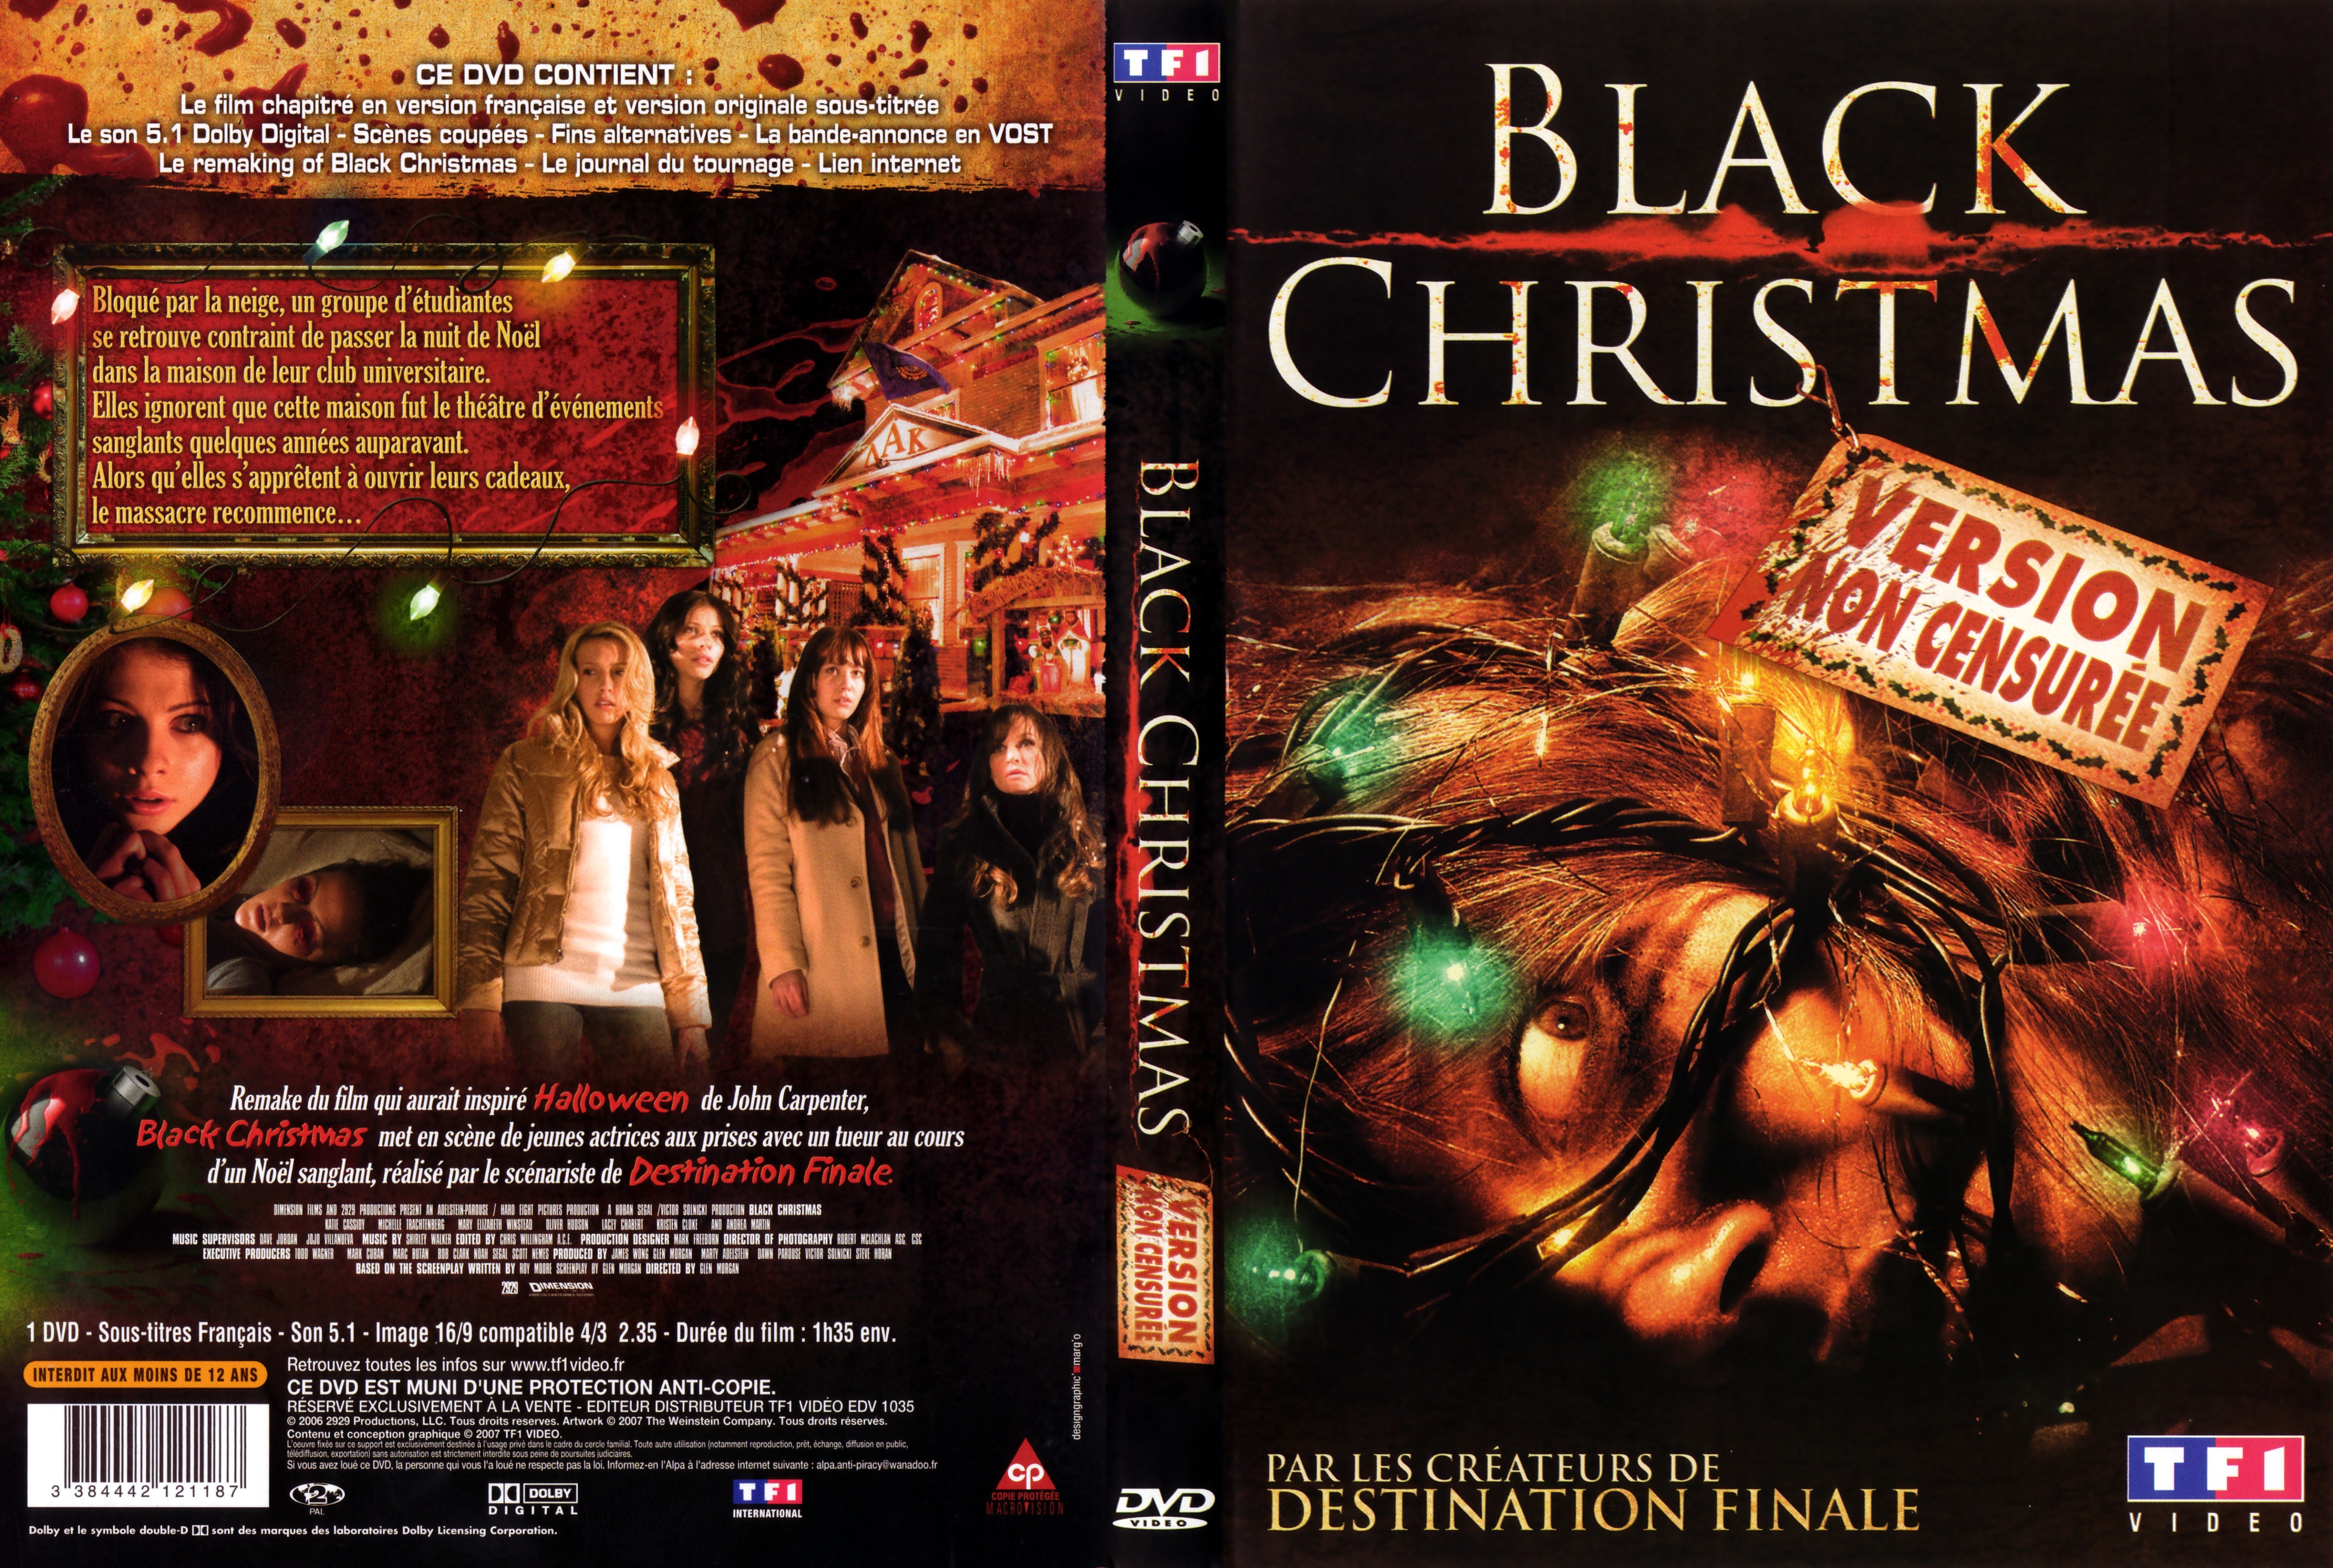 Jaquette DVD Black Christmas v3